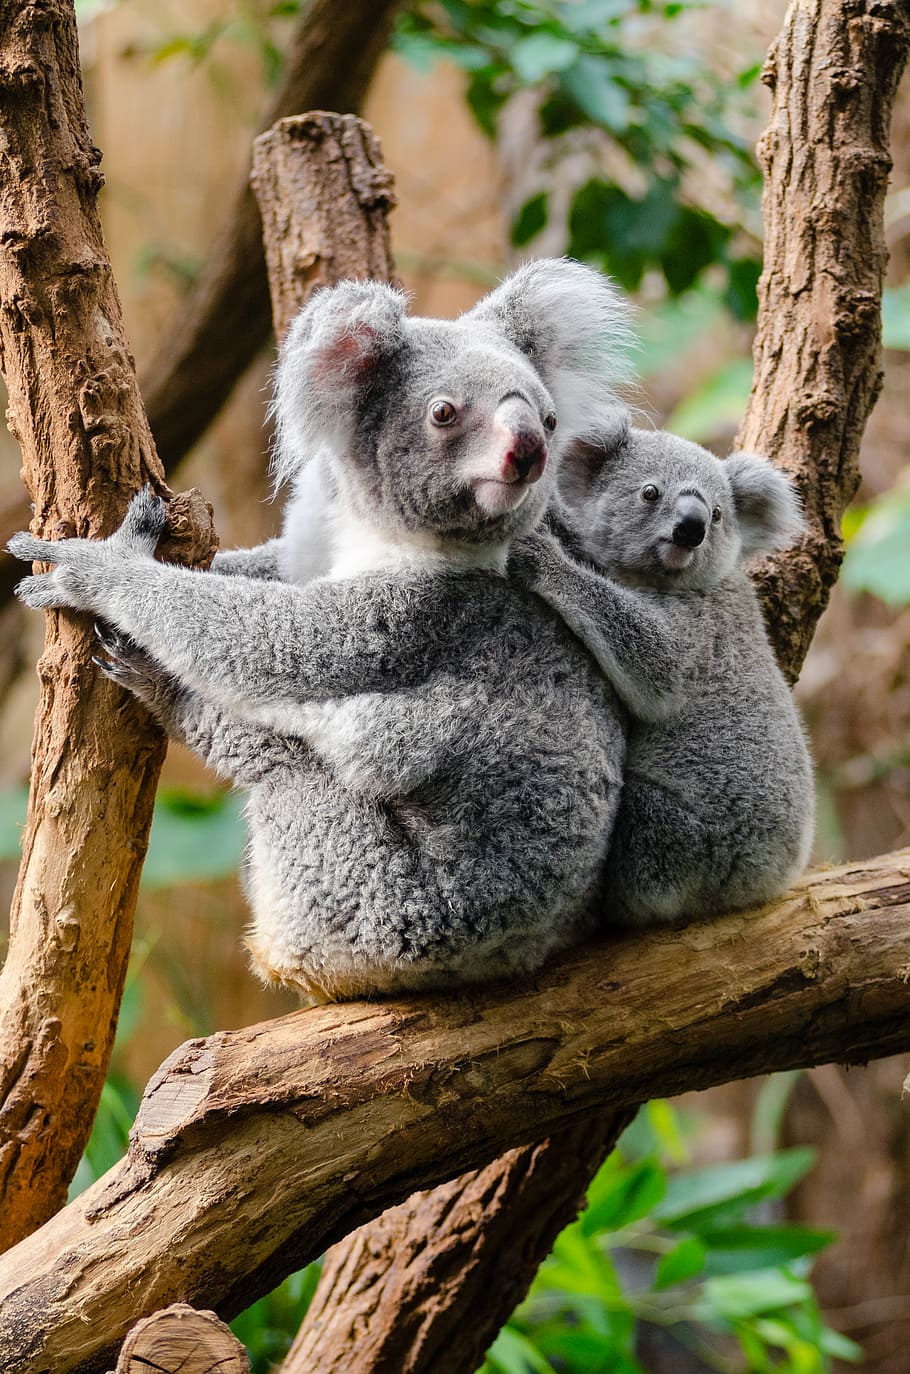 Koala, Keluarga, koala beruang di pohon, pohon, mamalia, hewan di alam liar, hewan liar, cabang, batang pohon, tanaman